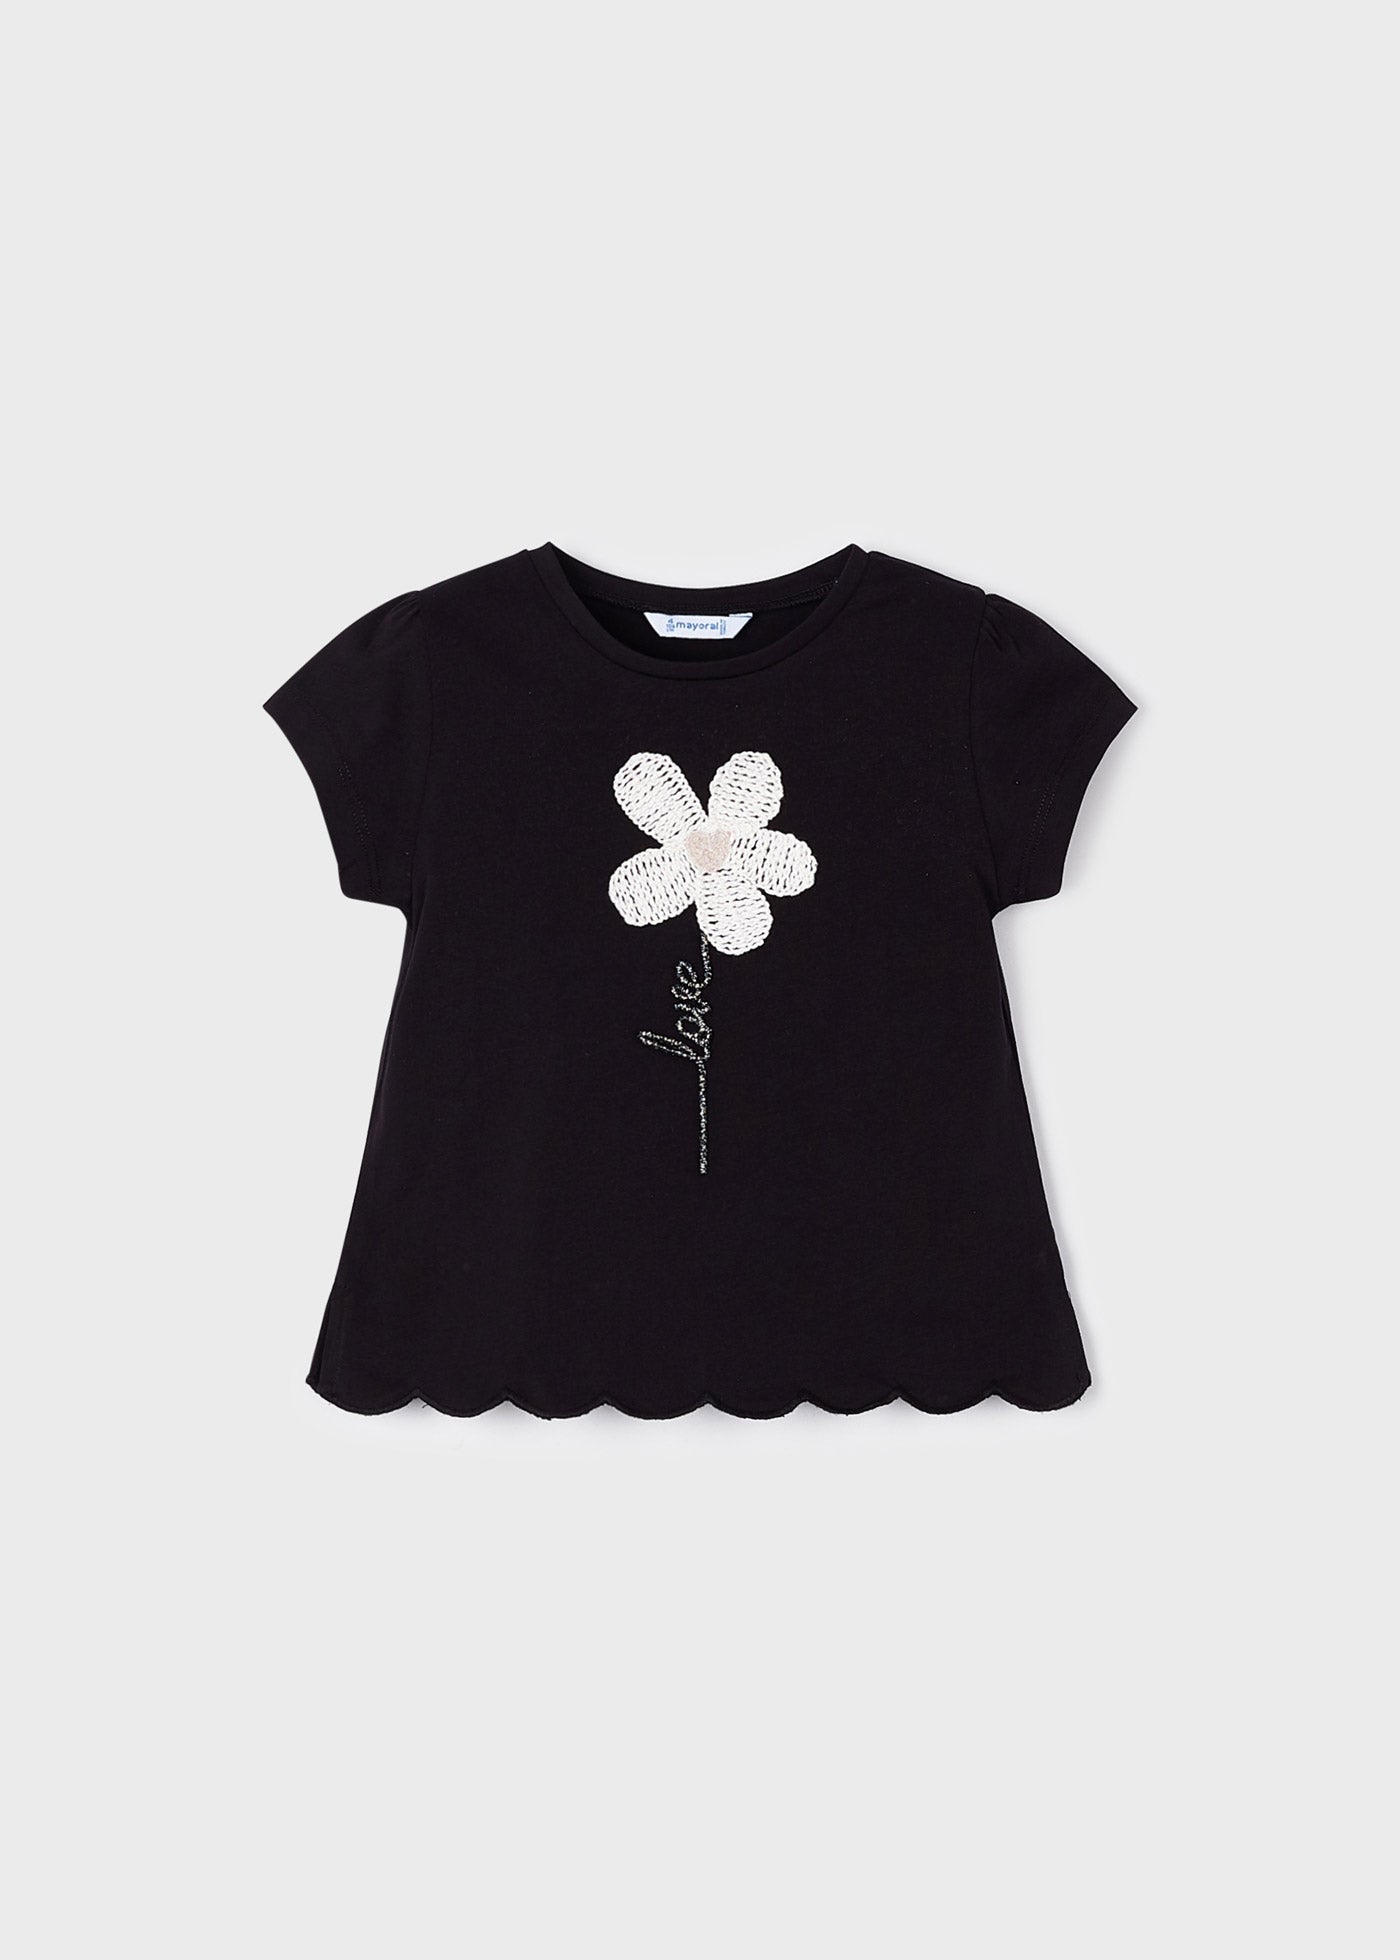 Mayoral Mini T-Shirt w/Flower Graphic & Scallop Hem _Black 3060-64